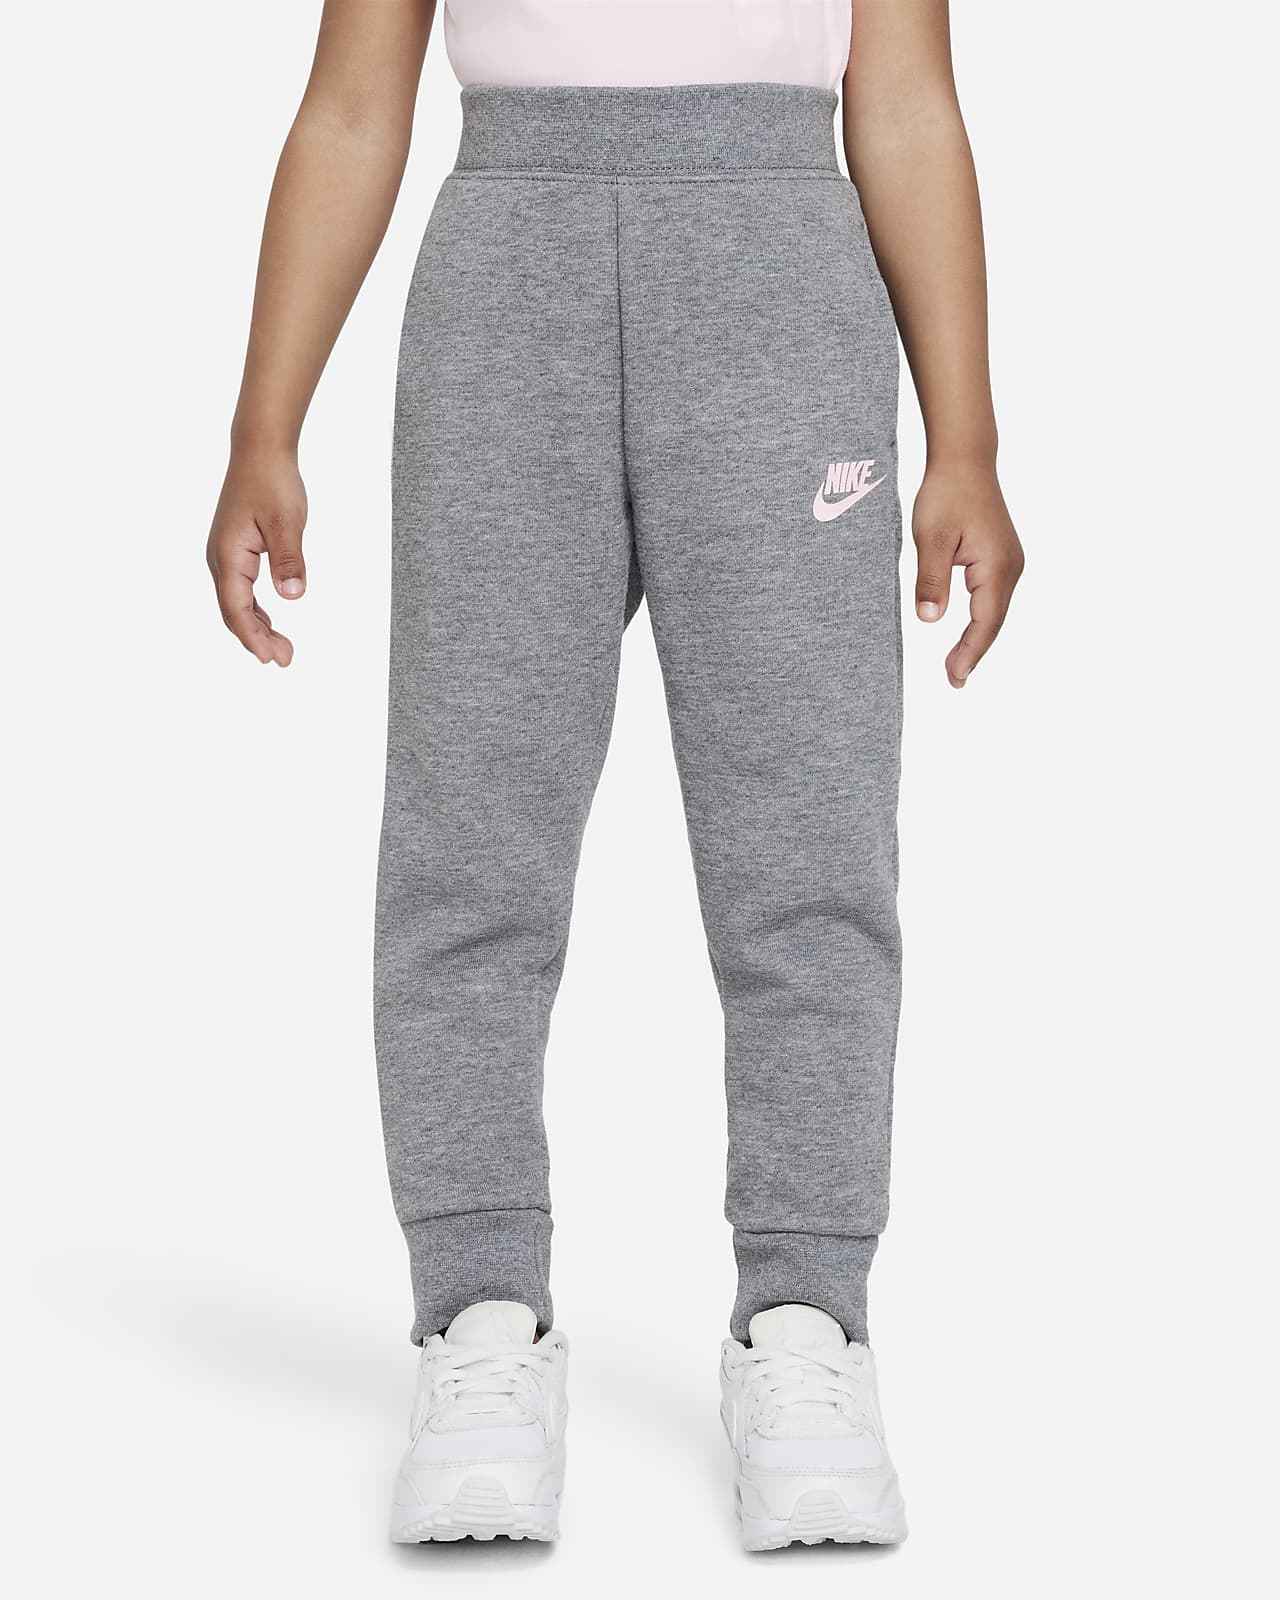 Fleece Nike LU Trousers. Toddler Nike Club Sportswear